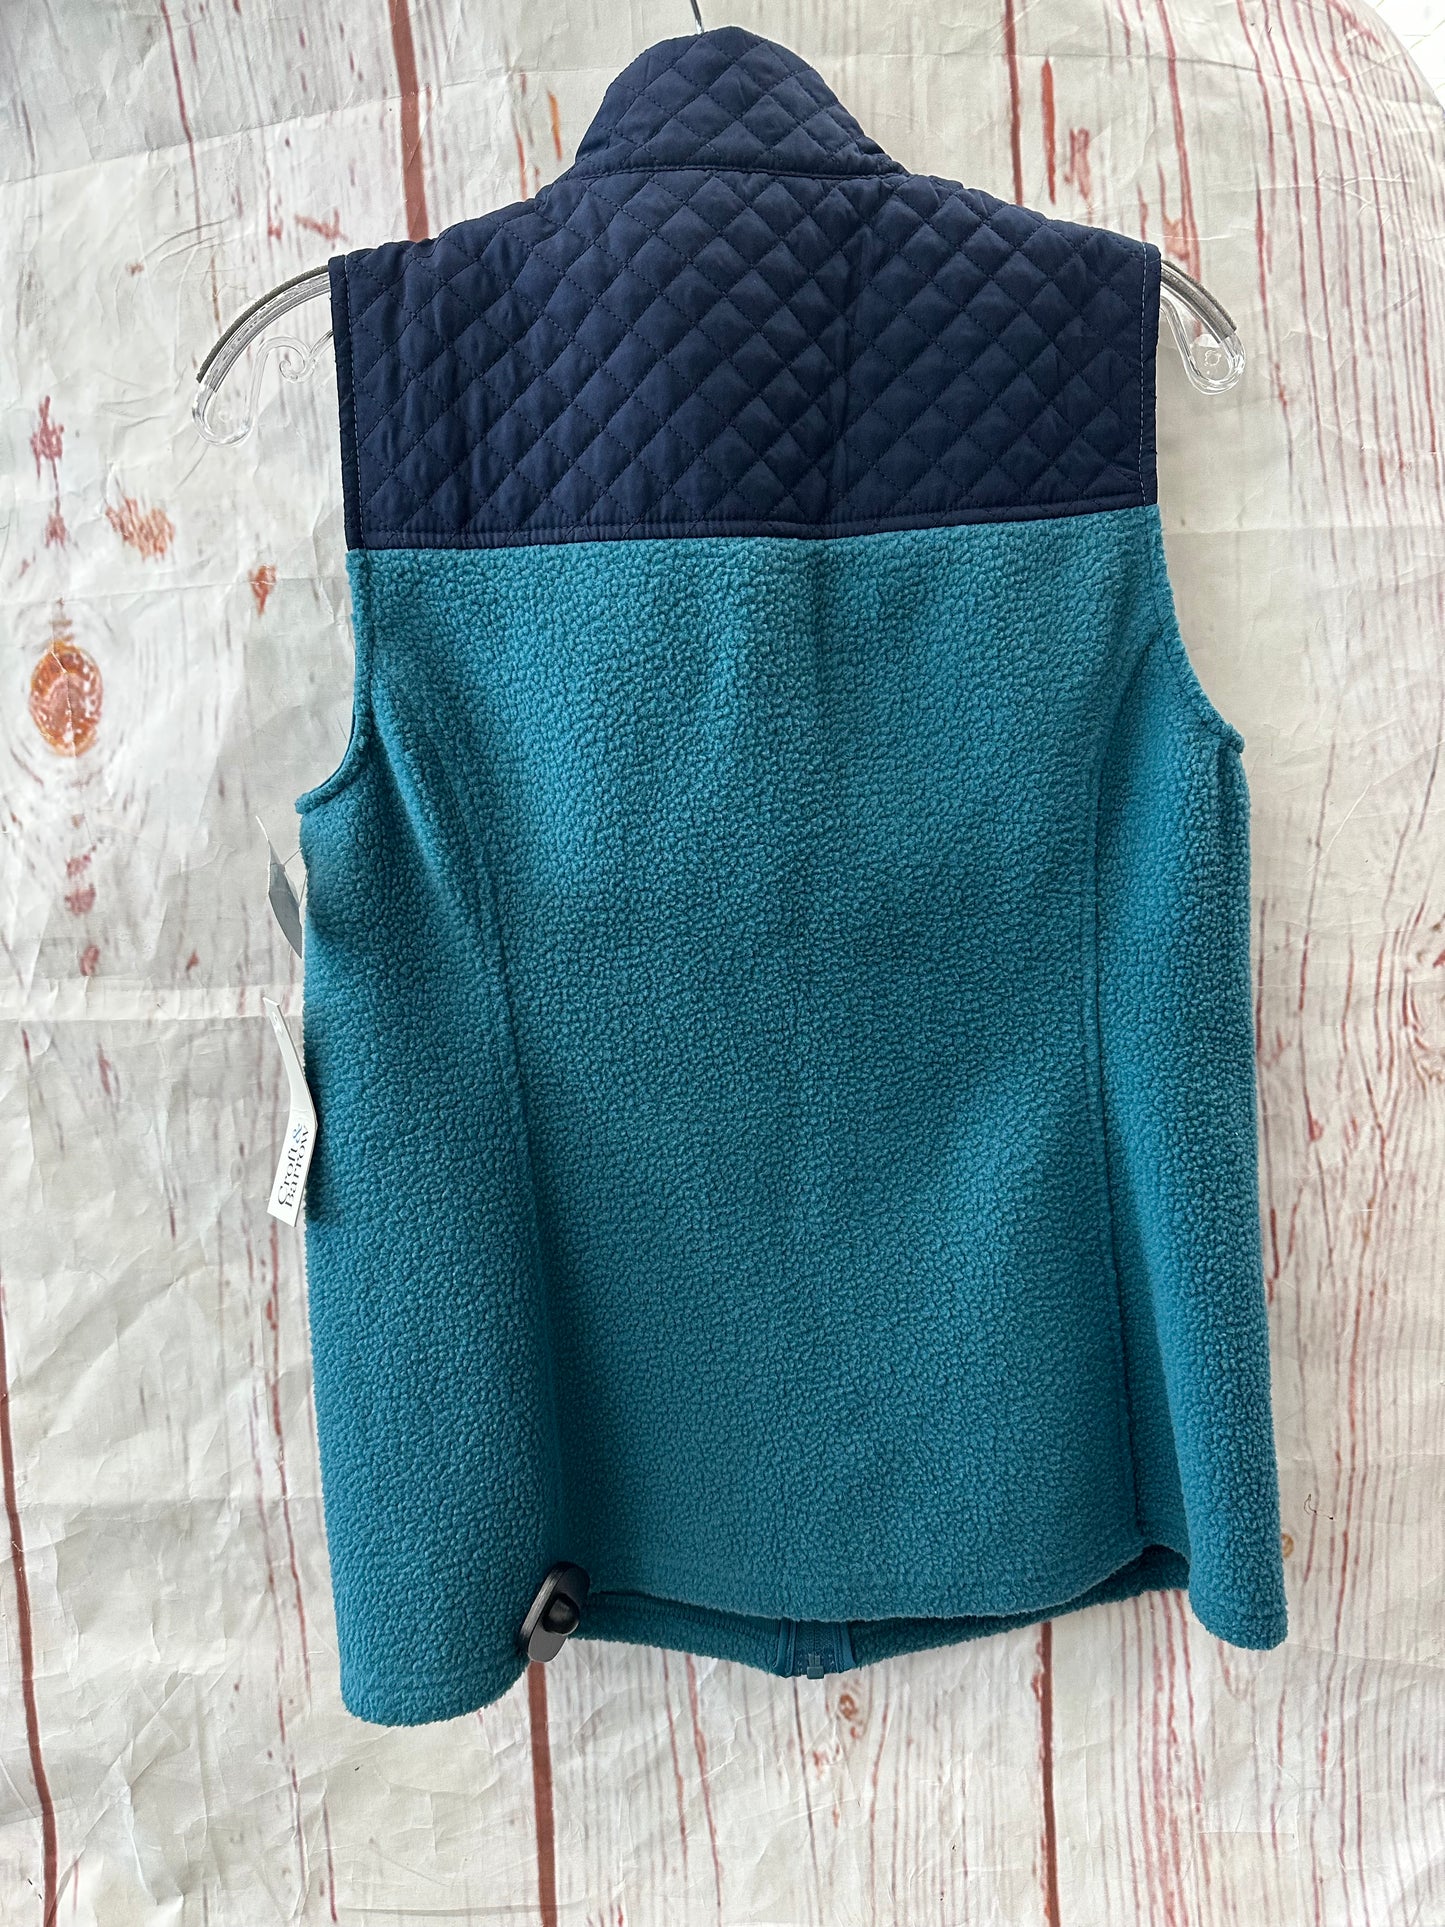 Vest Fleece By Croft And Barrow  Size: Xs